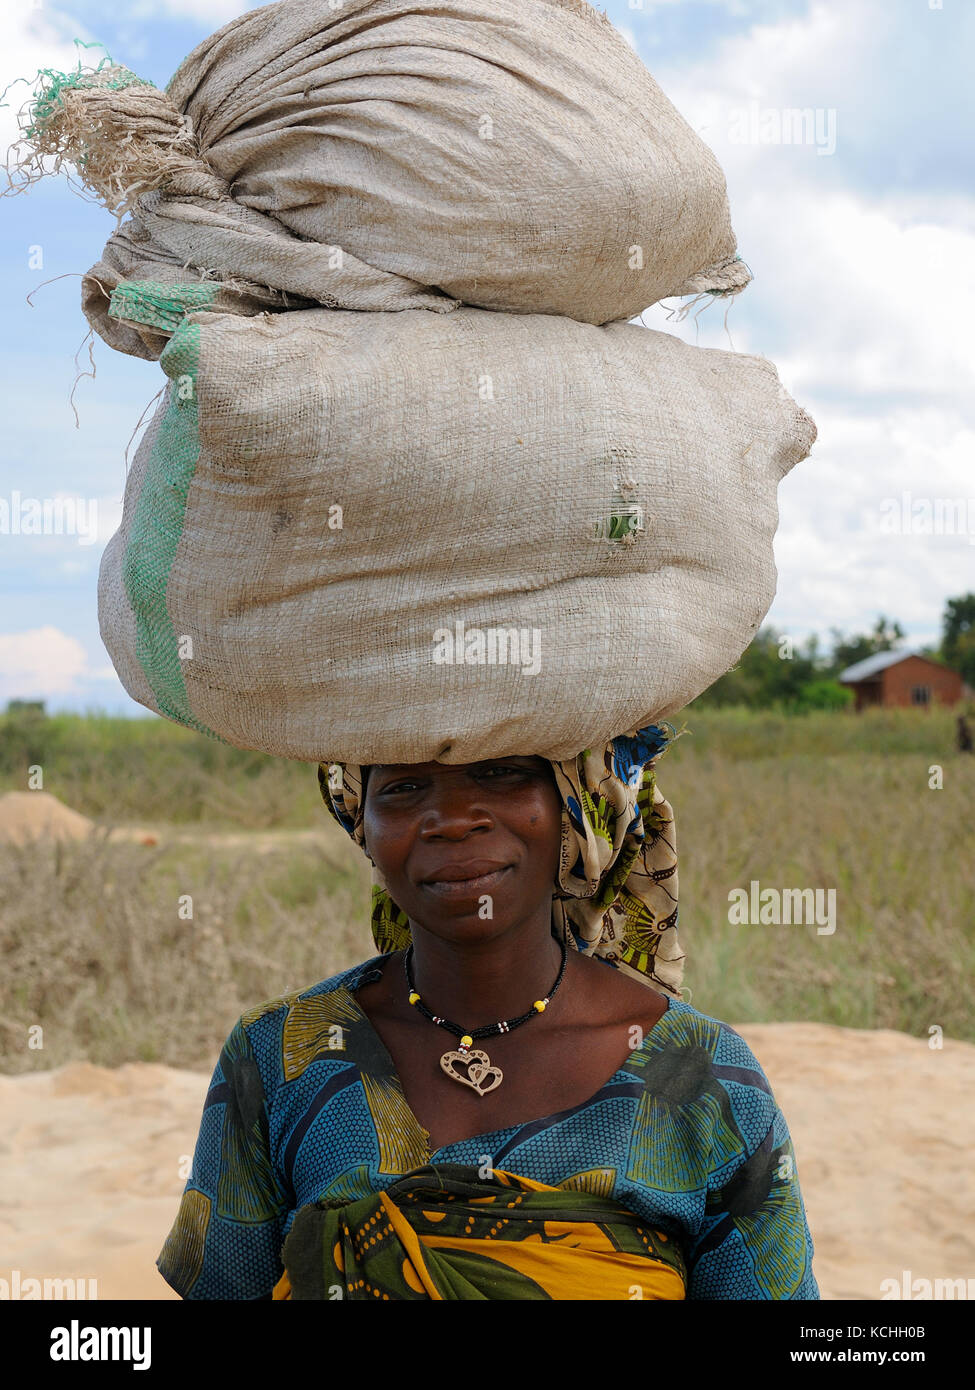 Ikola, Tansania - Mai 07: afrikanische Frau, die auf ihrem Kopf zwei Taschen von Korn in den Tanganjika-see in Tansania, ikola im Mai 07, 2013 Stockfoto